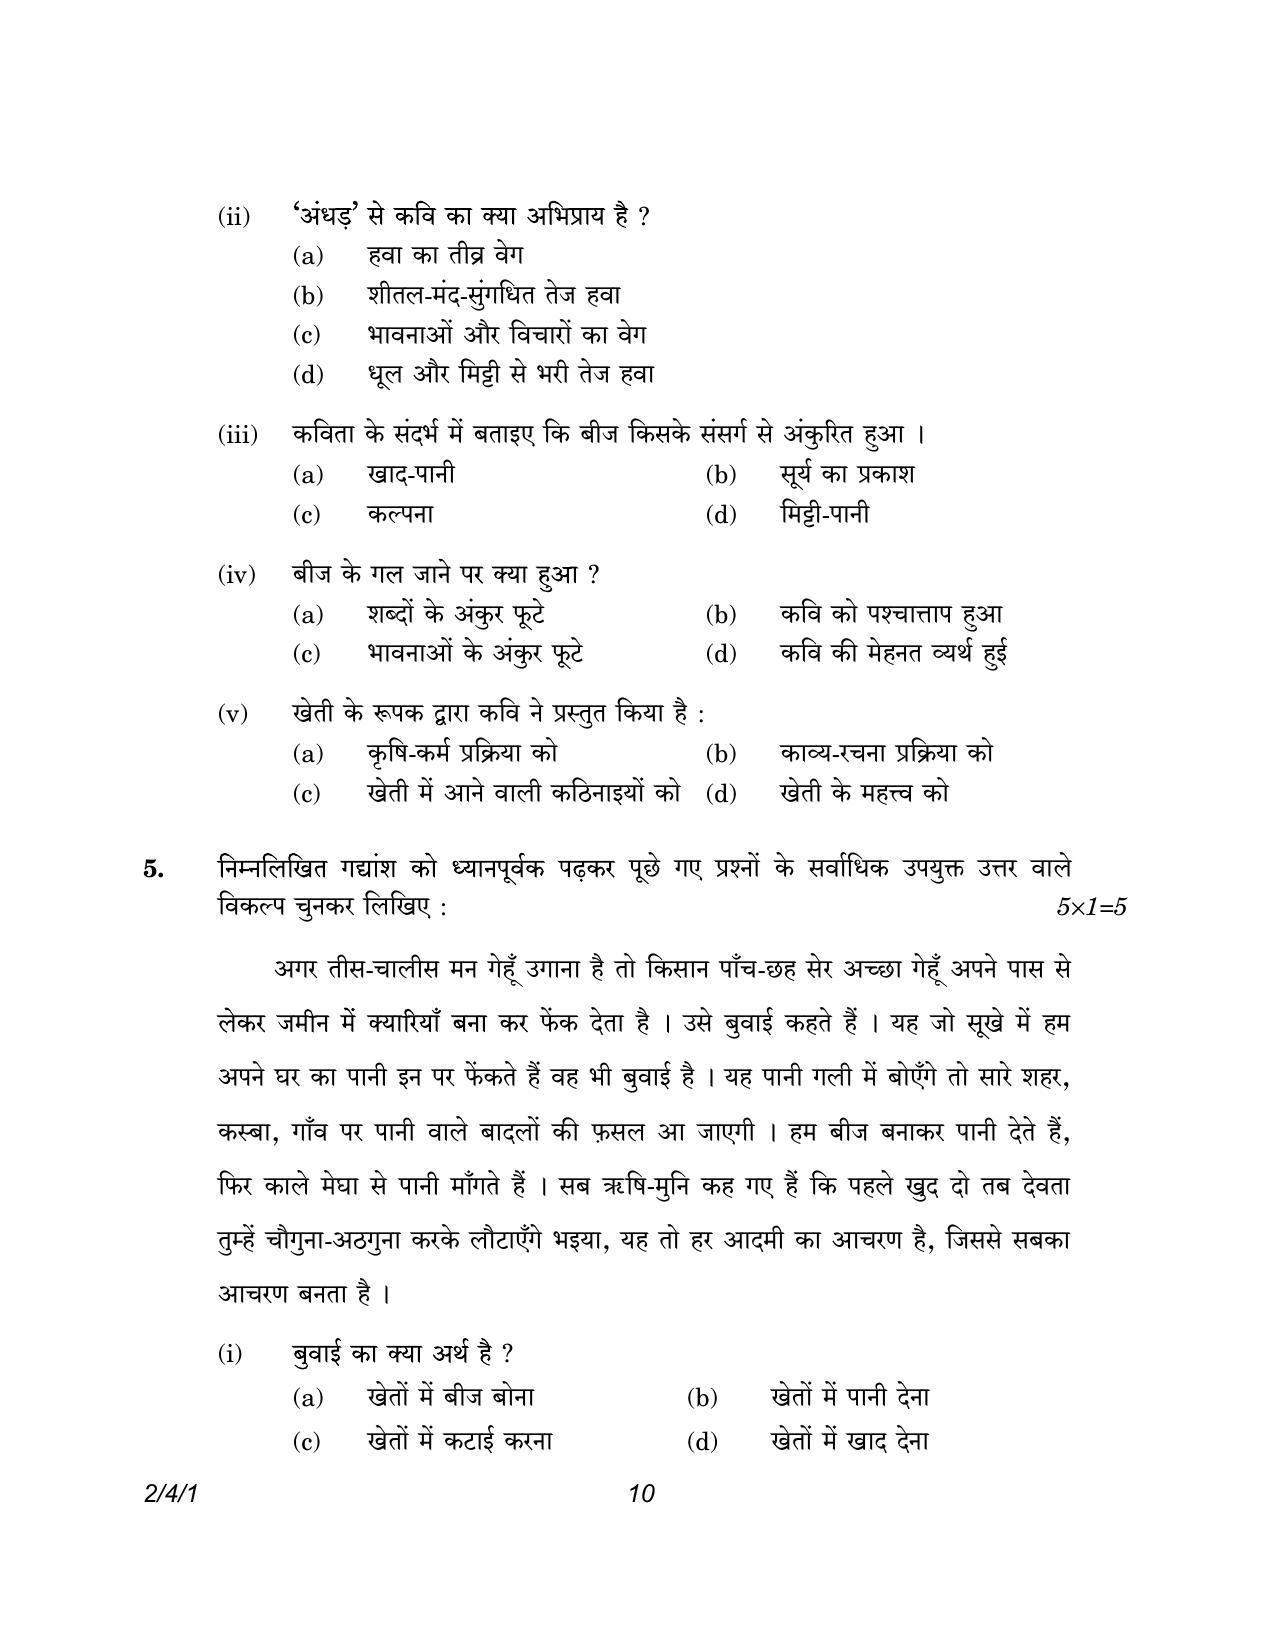 CBSE Class 12 2-4-1 Hindi Core version 2023 Question Paper - Page 10